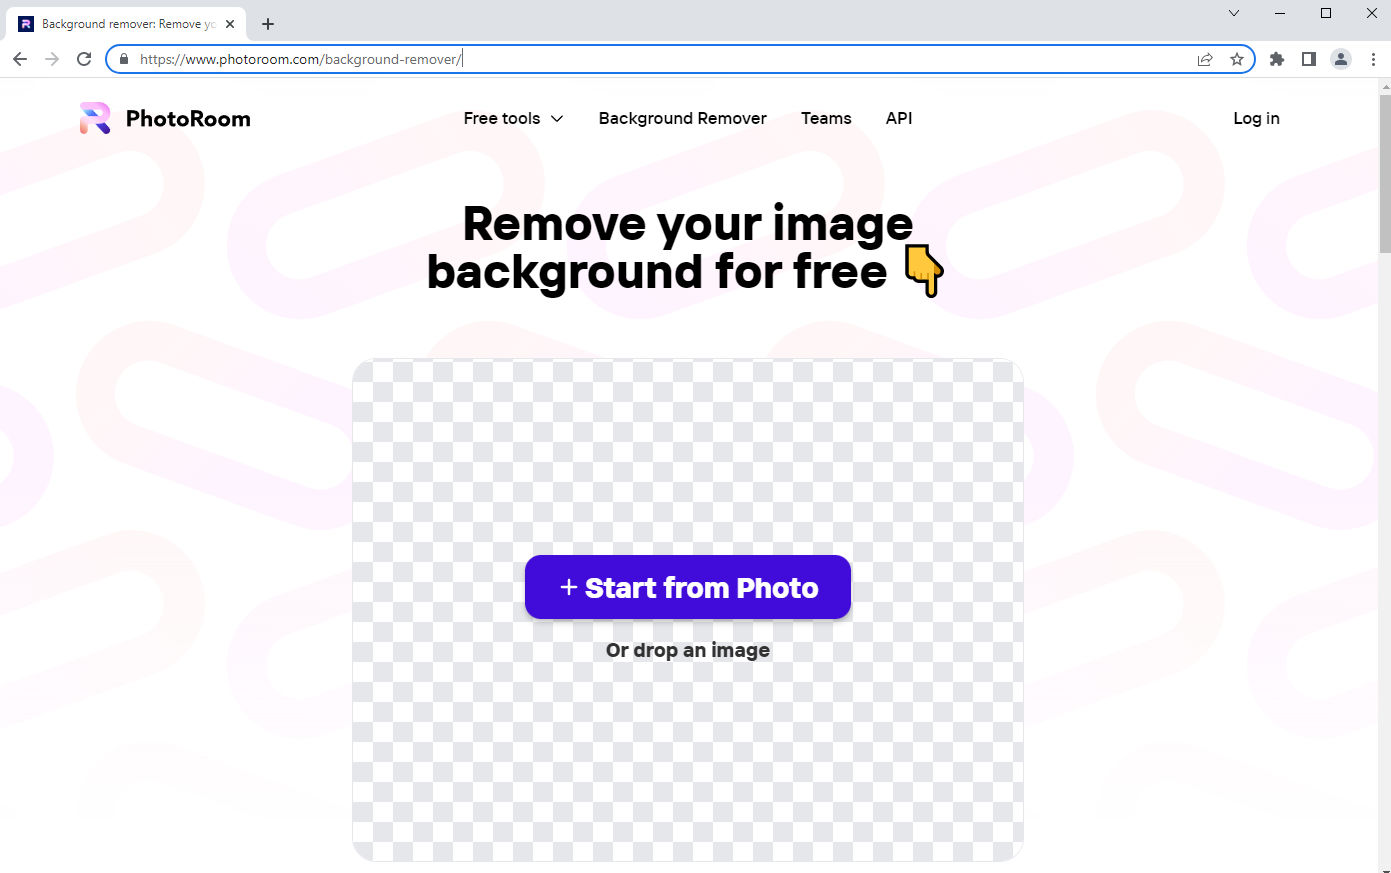 Go to PhotoRoom homepage